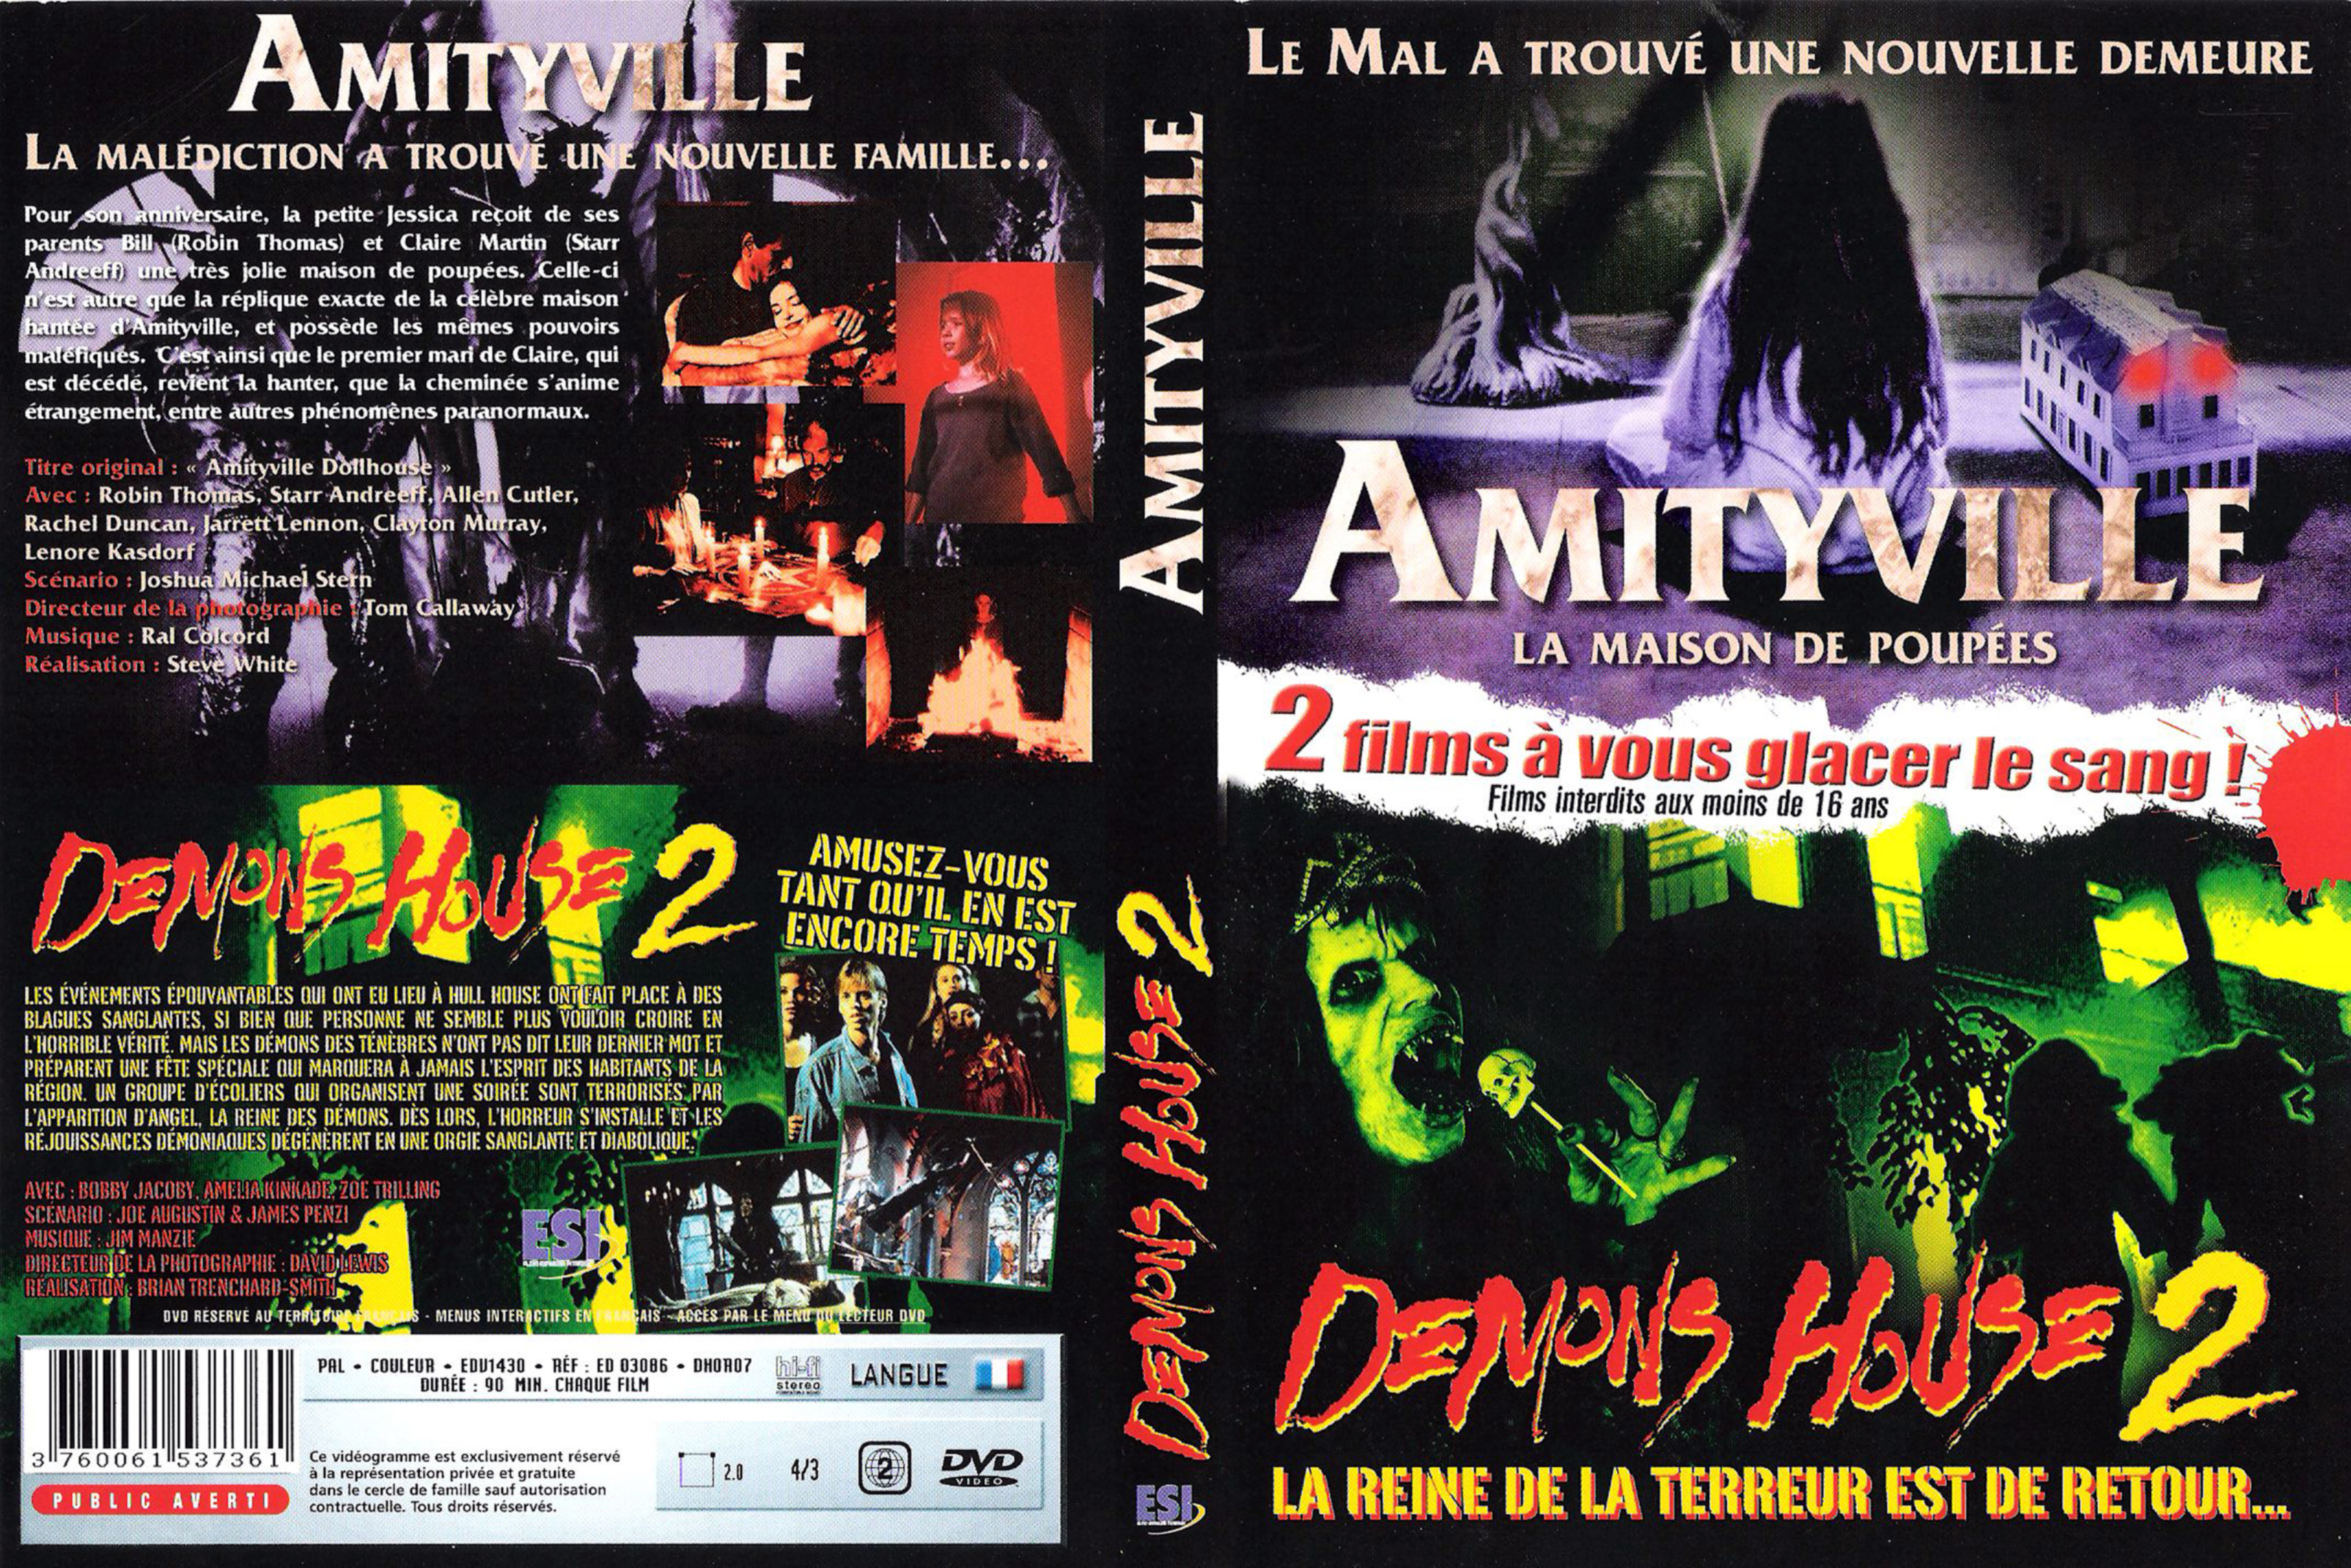 Jaquette DVD Amityville + Demon house 2